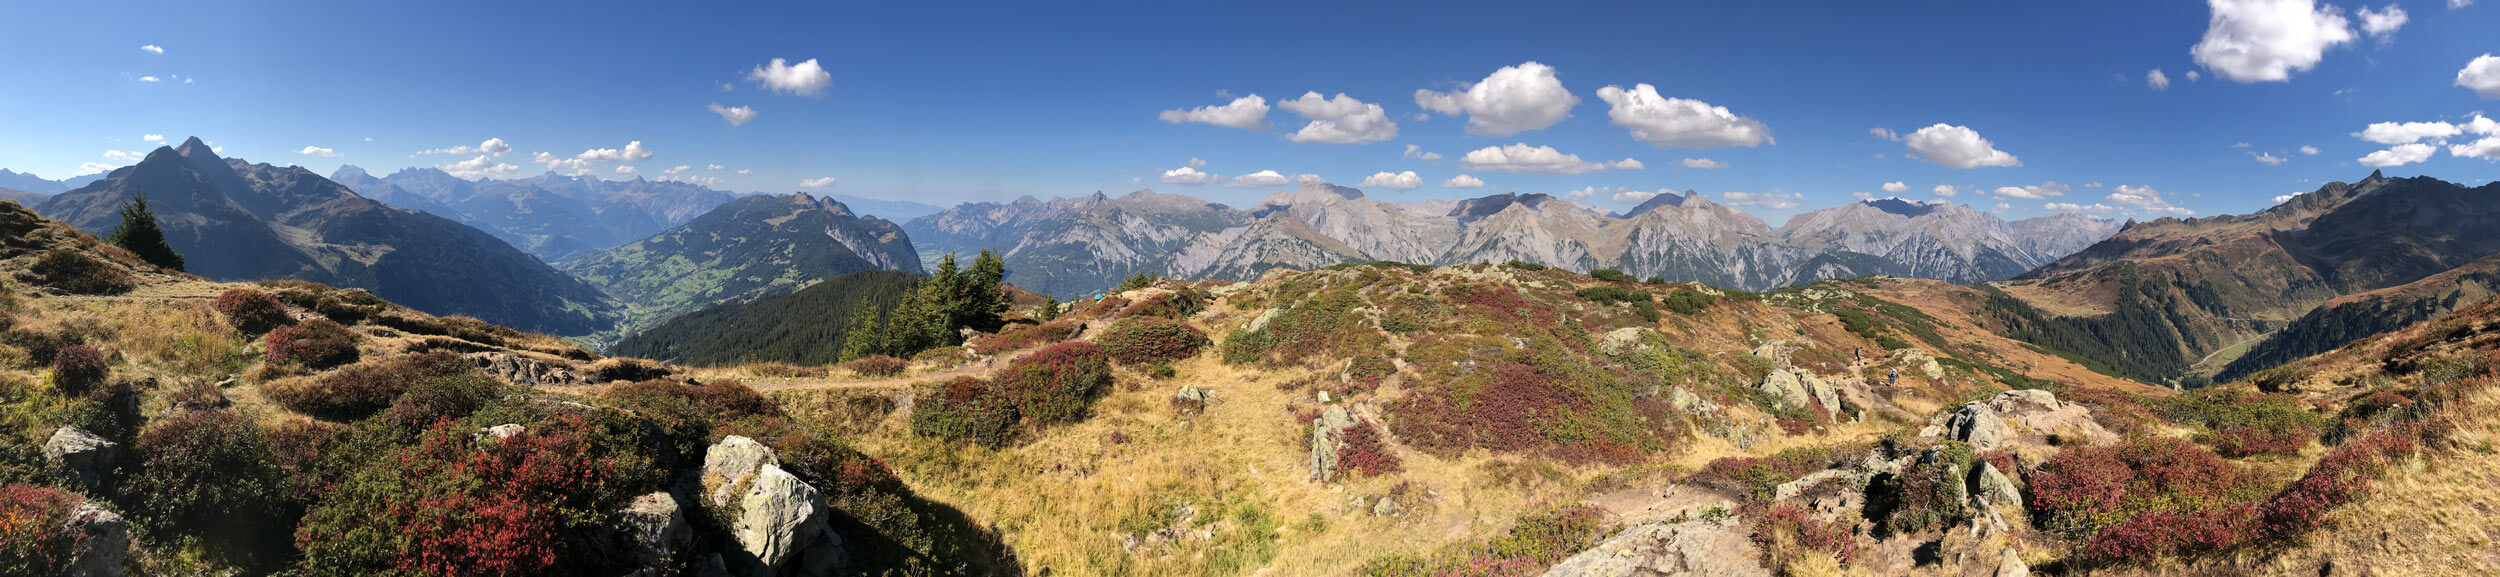 Herrliches Bergpanorama in den Tiroler Bergen